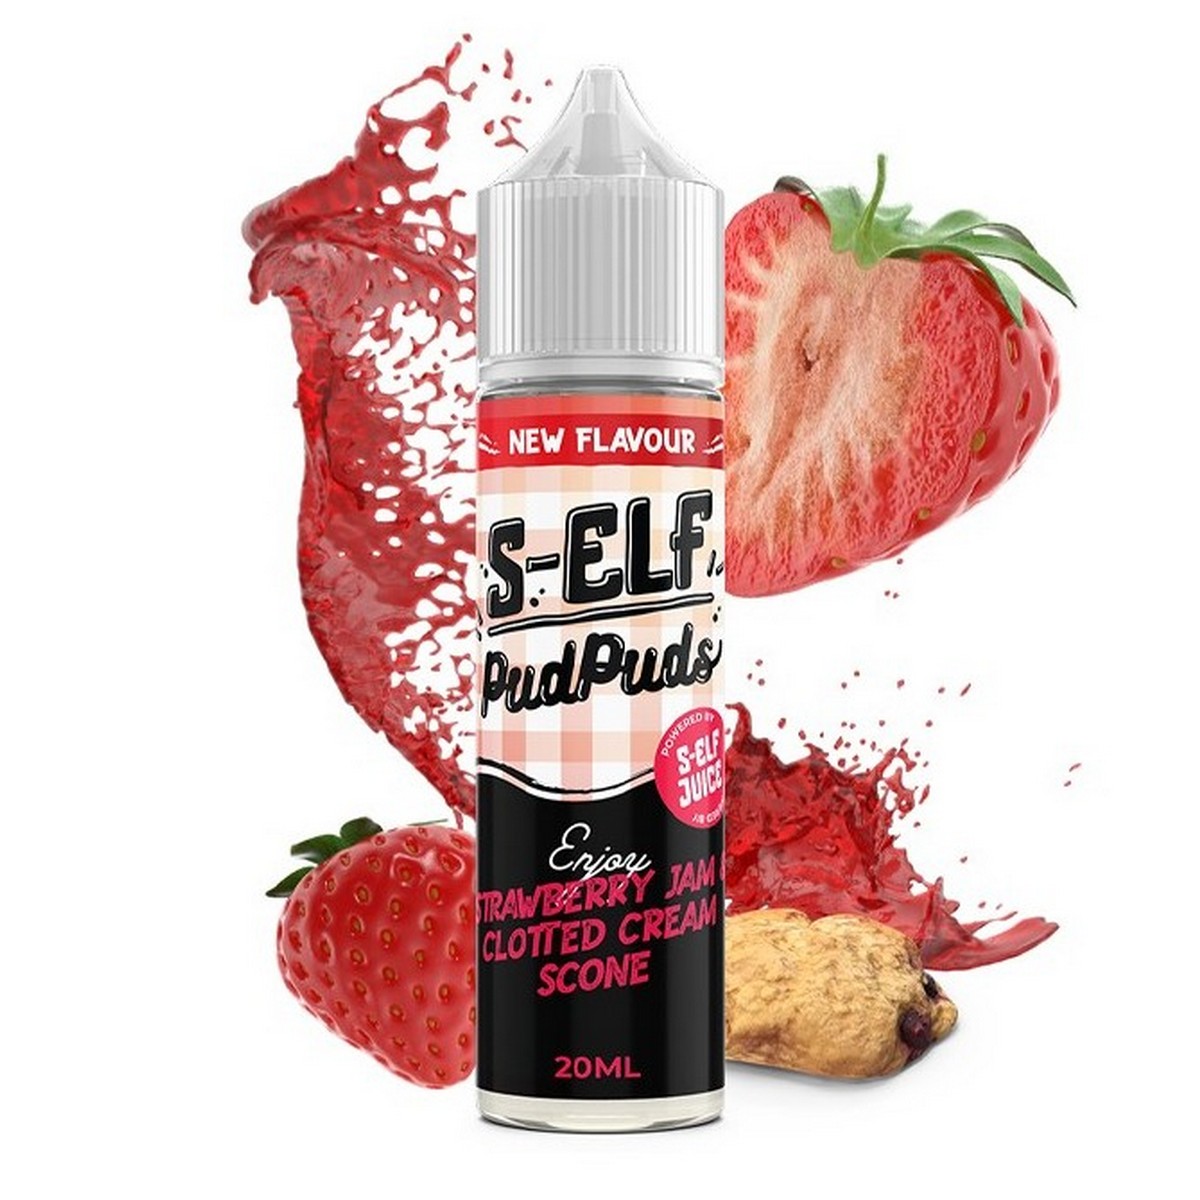 S-Elf Juice Pud Puds Flavour Shot Strawberry Jam & Clotted Cream Scone 20ml/60ml